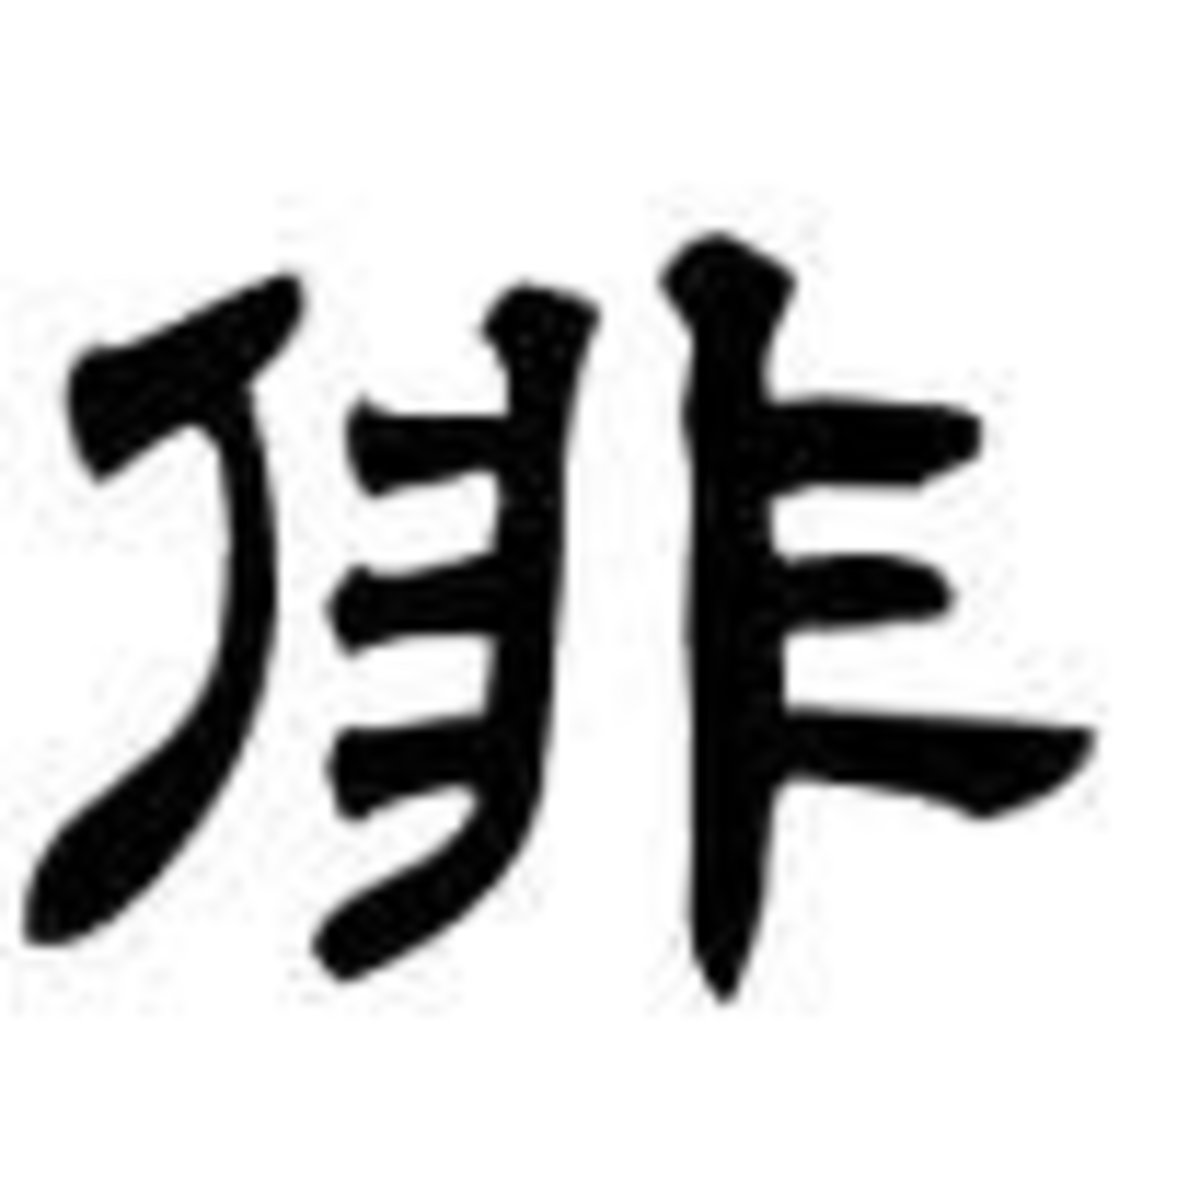 Haiku No Fear Including The Kanji Symbols